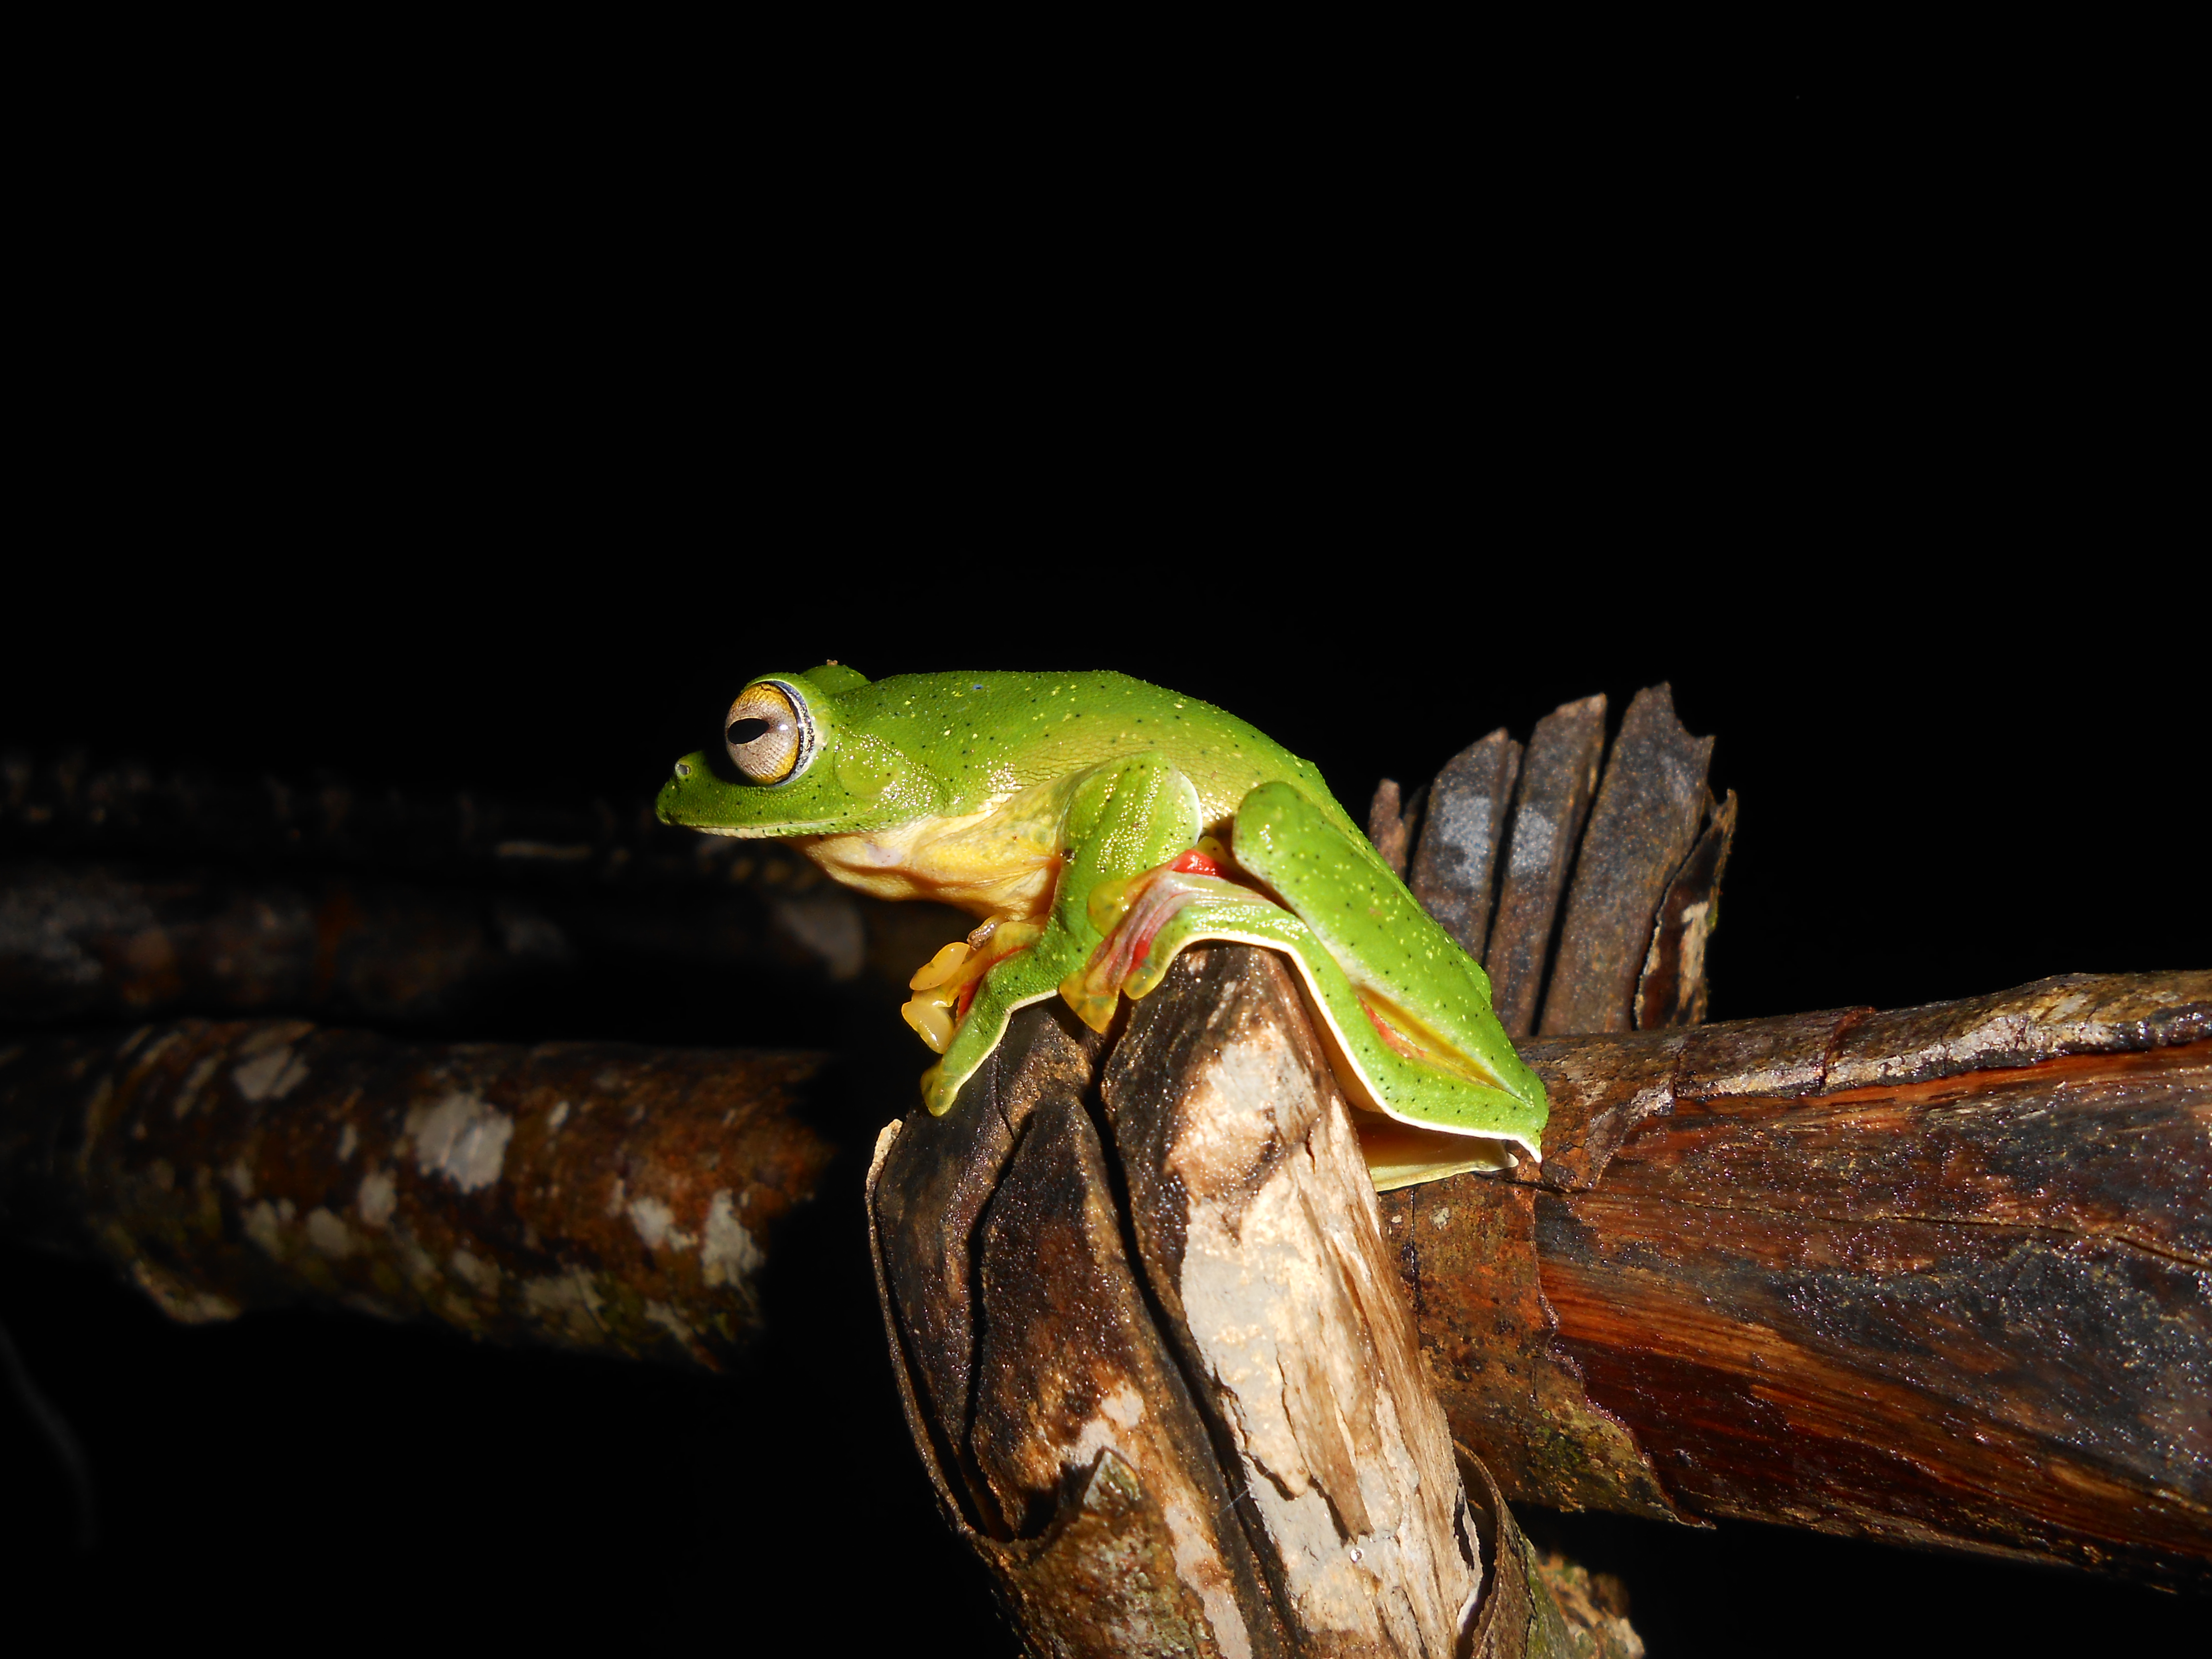 Malabar gliding frog on tree